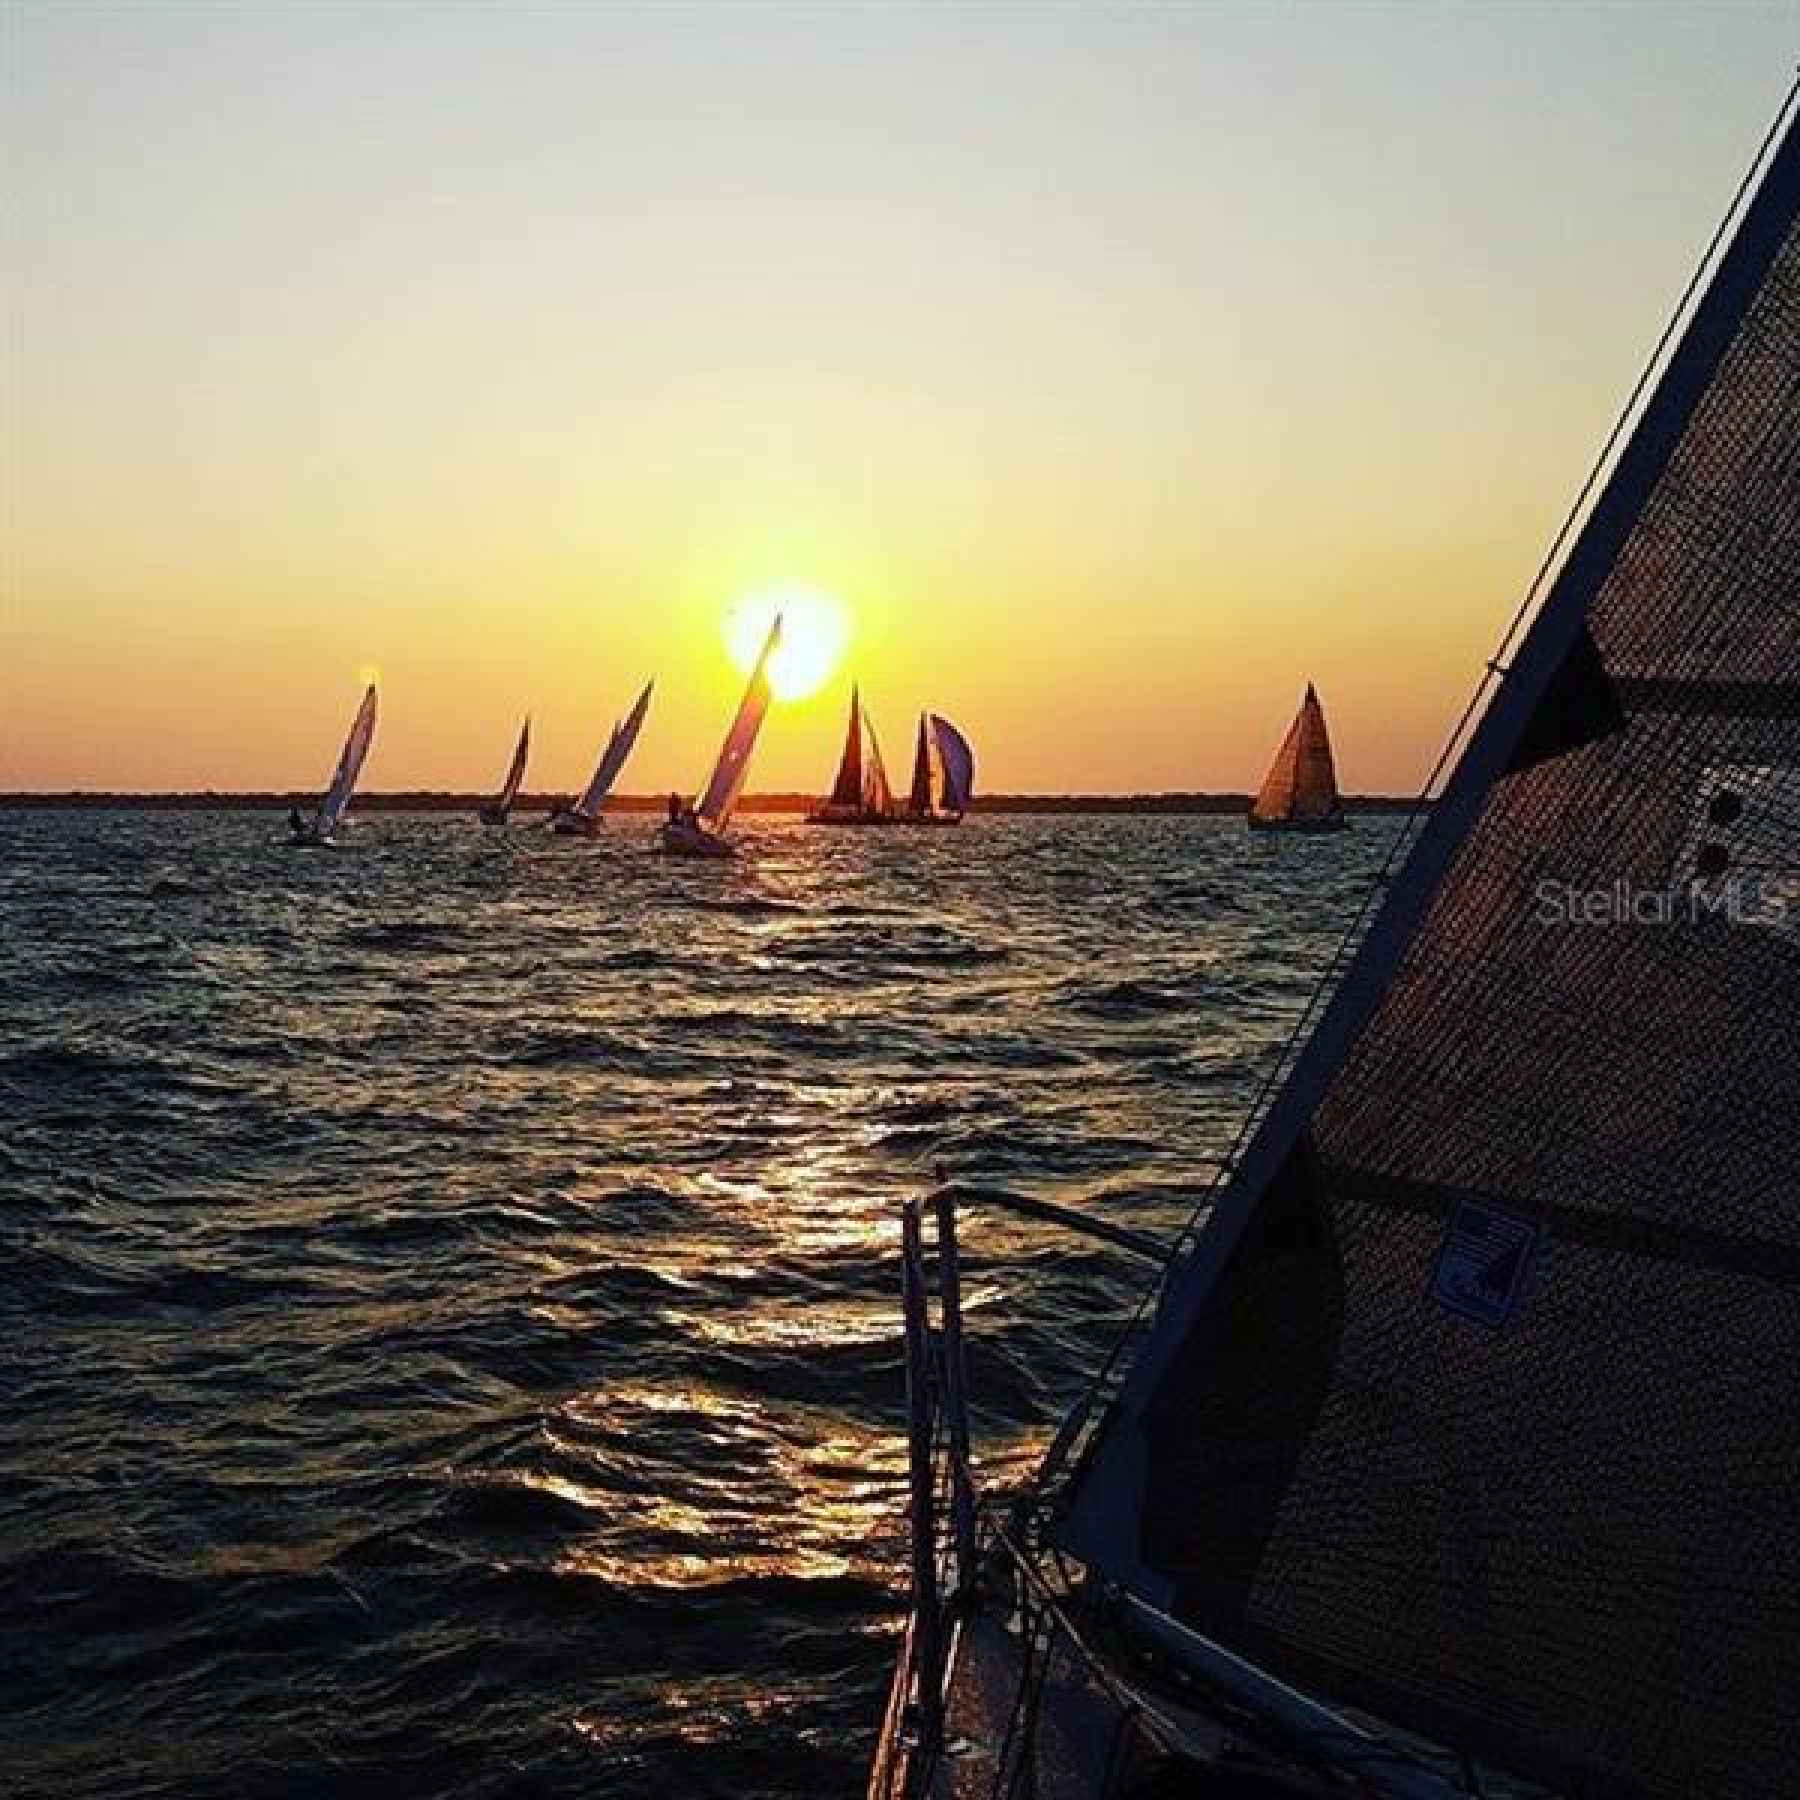 Sunset sailboat racing on Tampa Bay